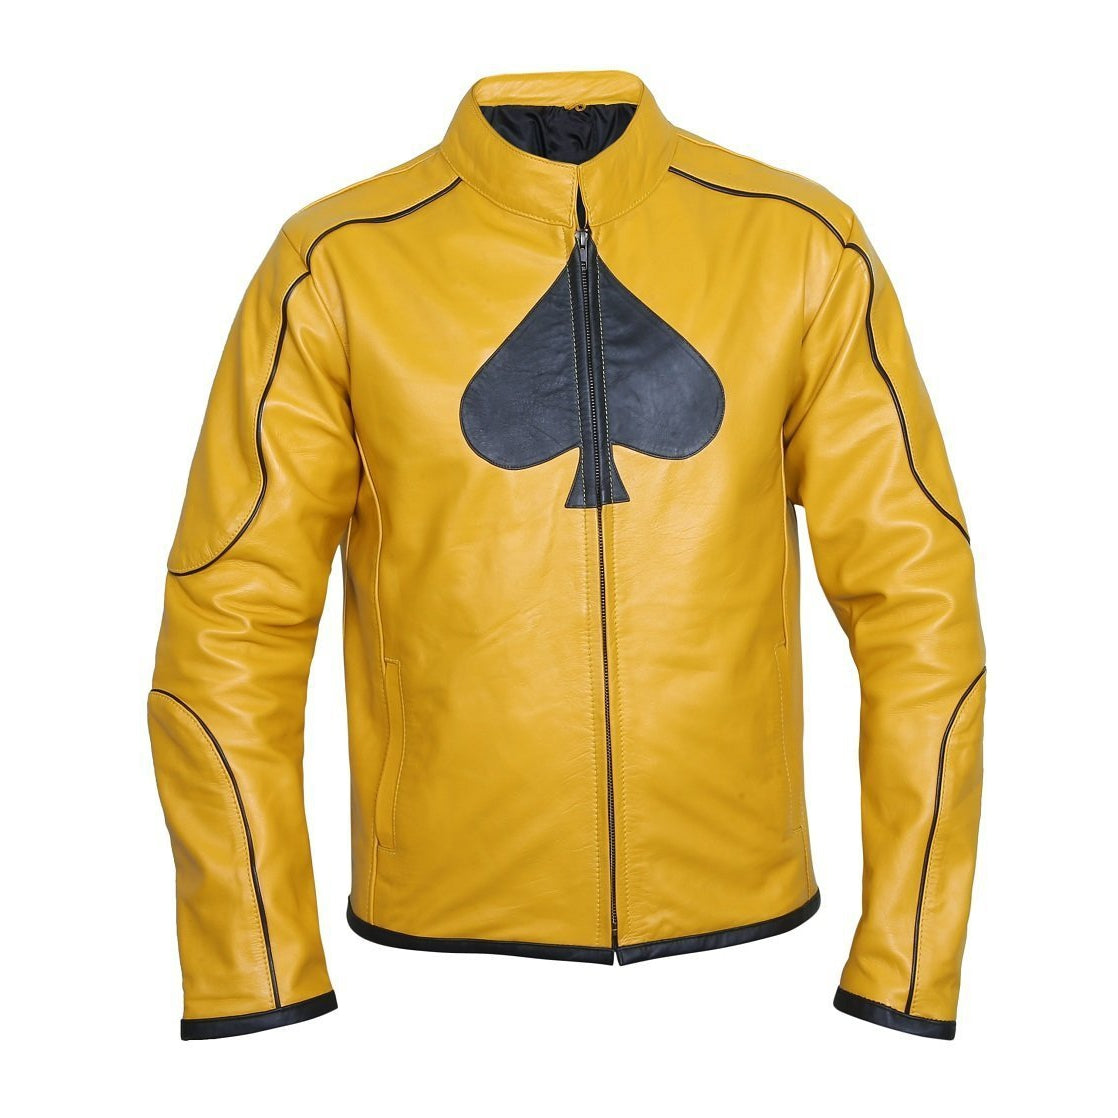 Classic Yellow Leather Jacket